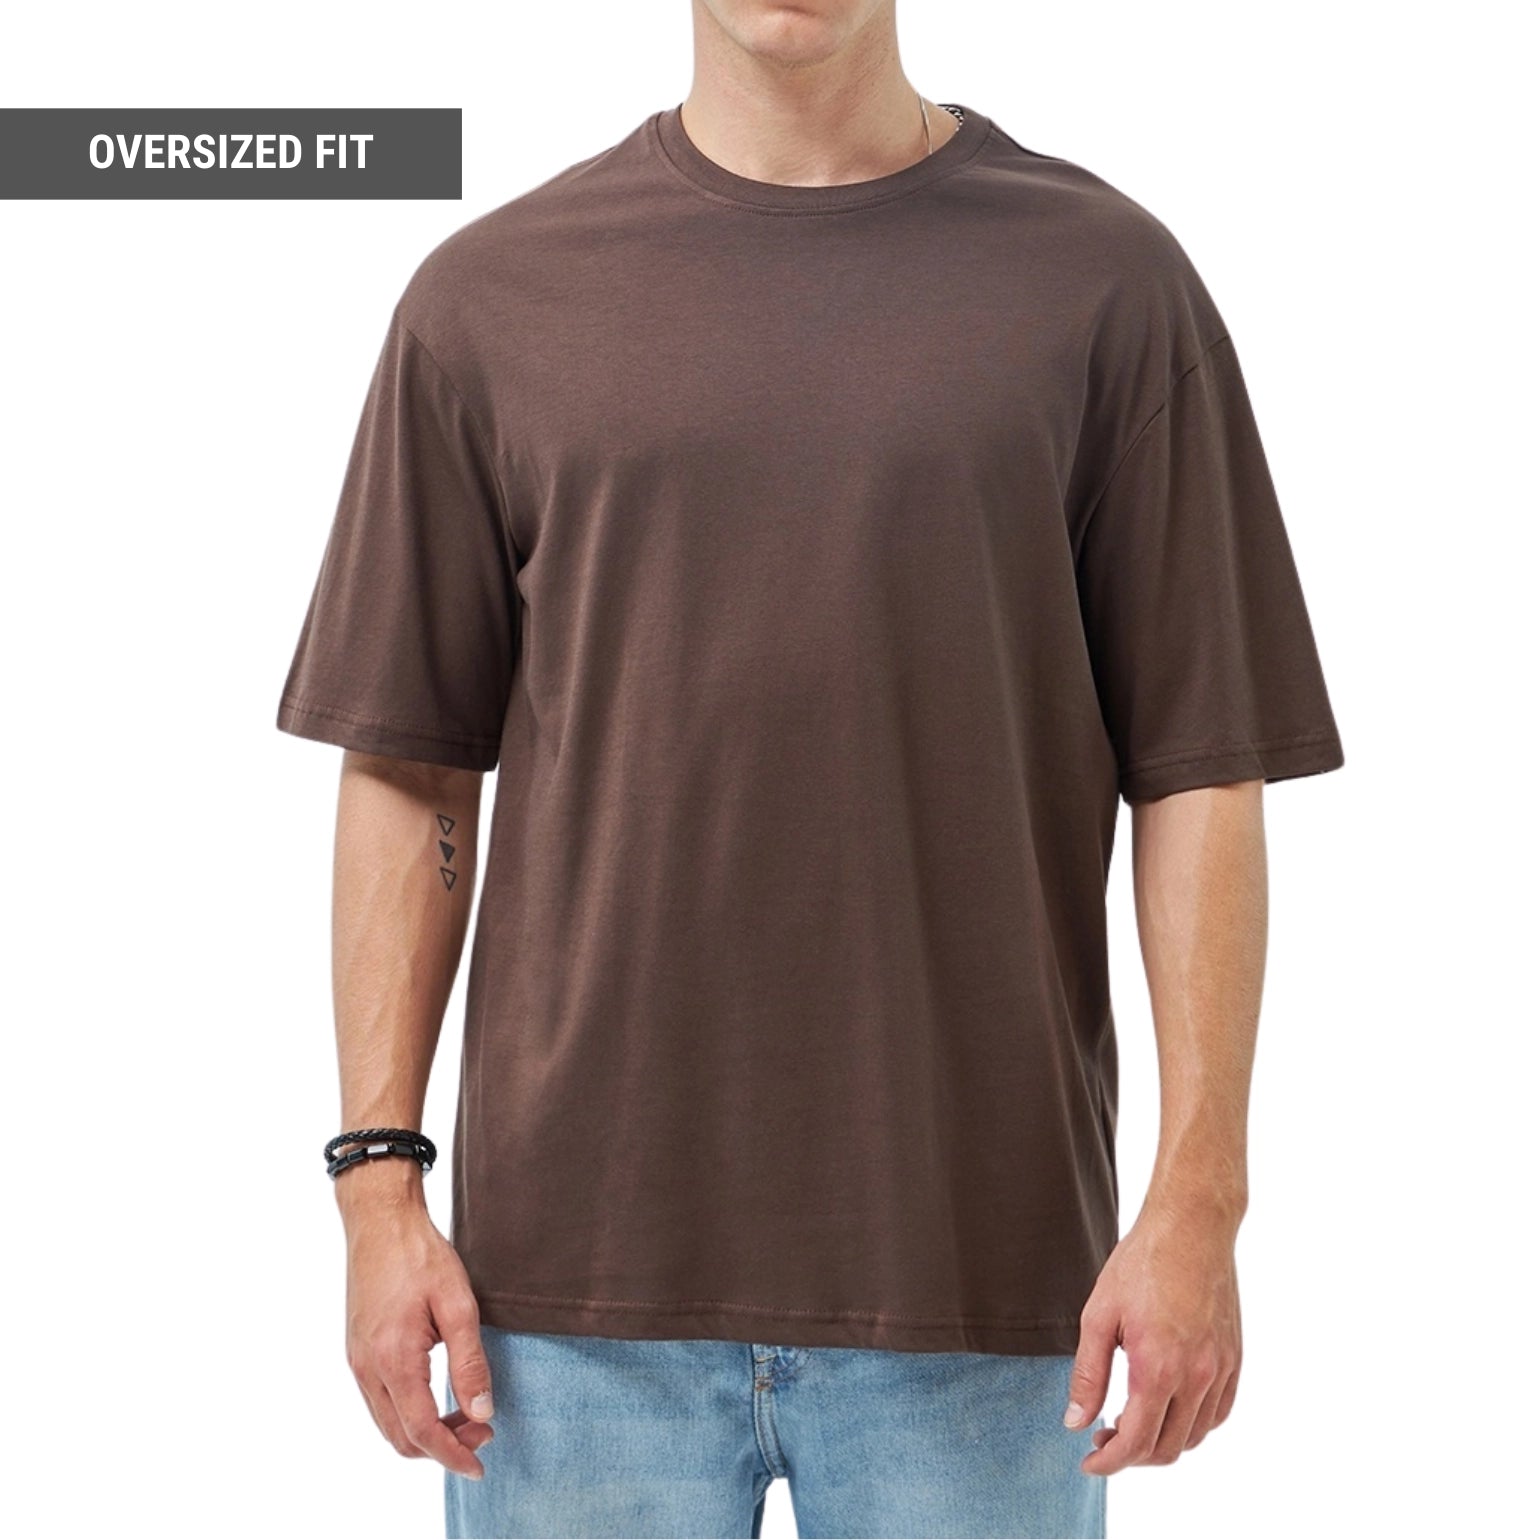 Pack of 3 Oversized T-shirt in Brown, White, Lavender - SleekandPeek